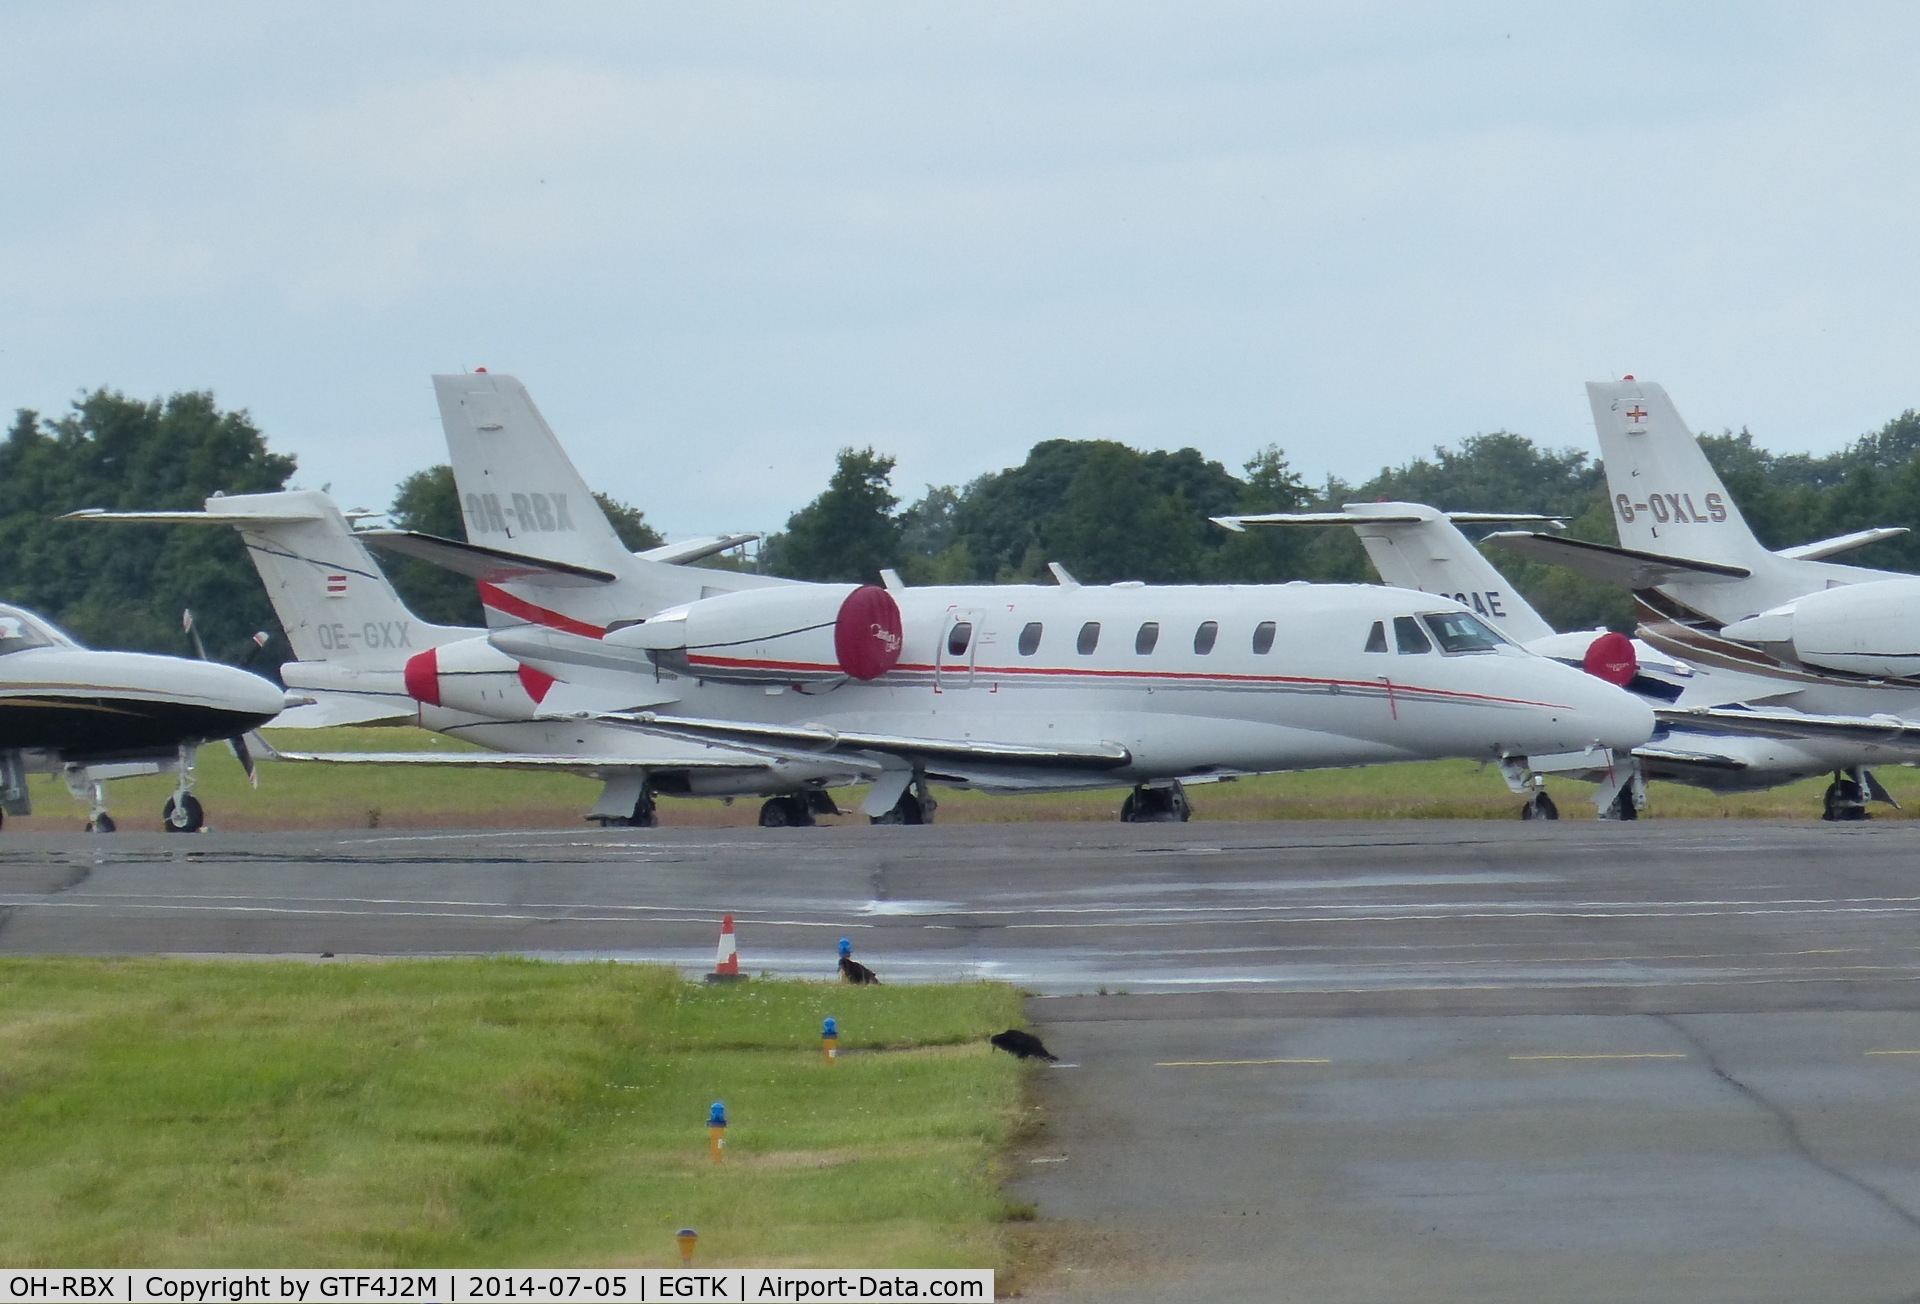 OH-RBX, 1999 Cessna 560XL Citation Excel C/N 560-5056, OH-RBX at Kidlington for 2014 Grand Prix